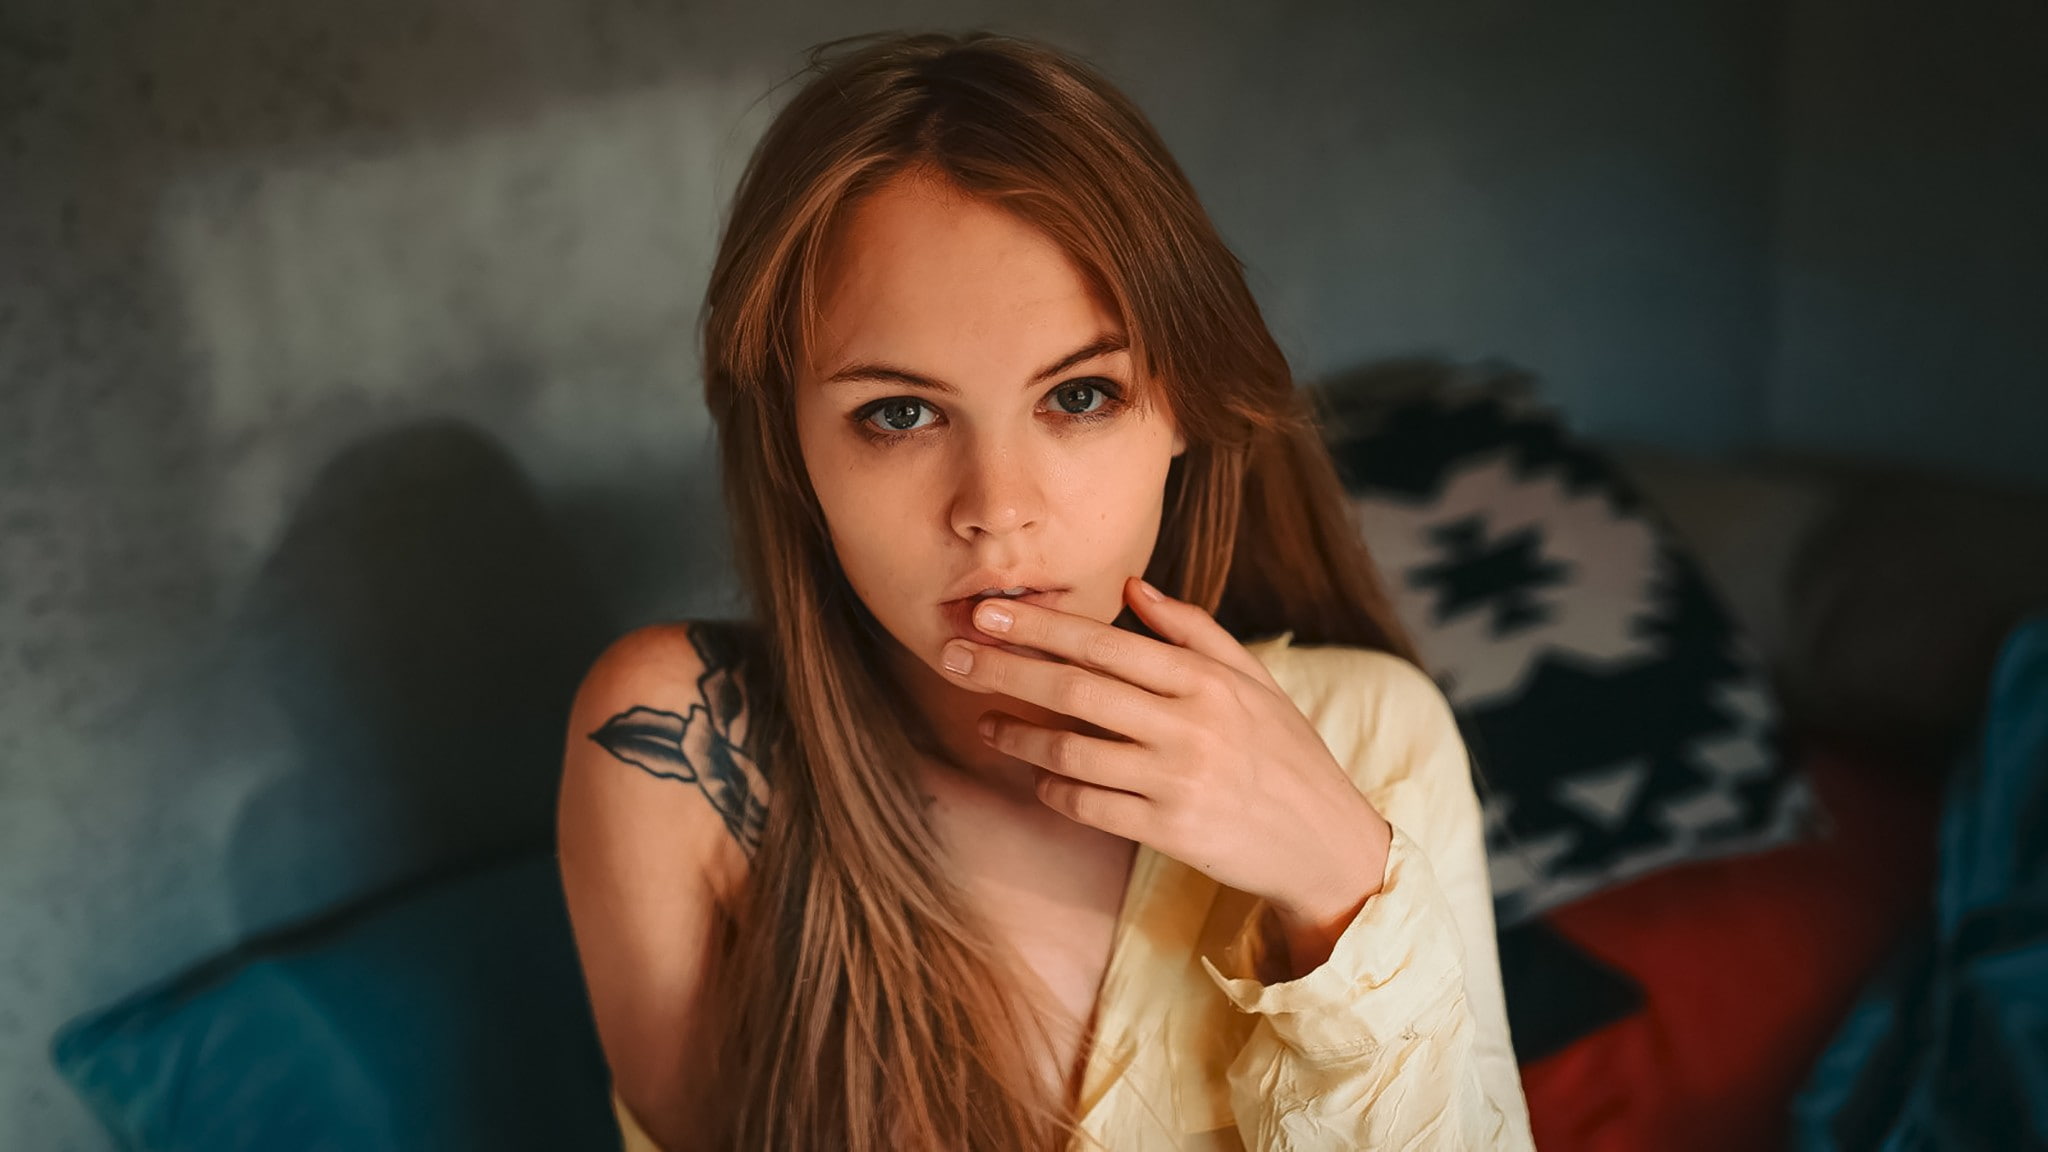 Free Download Hd Wallpaper Women Model Finger On Lips Anastasia Scheglova Looking At